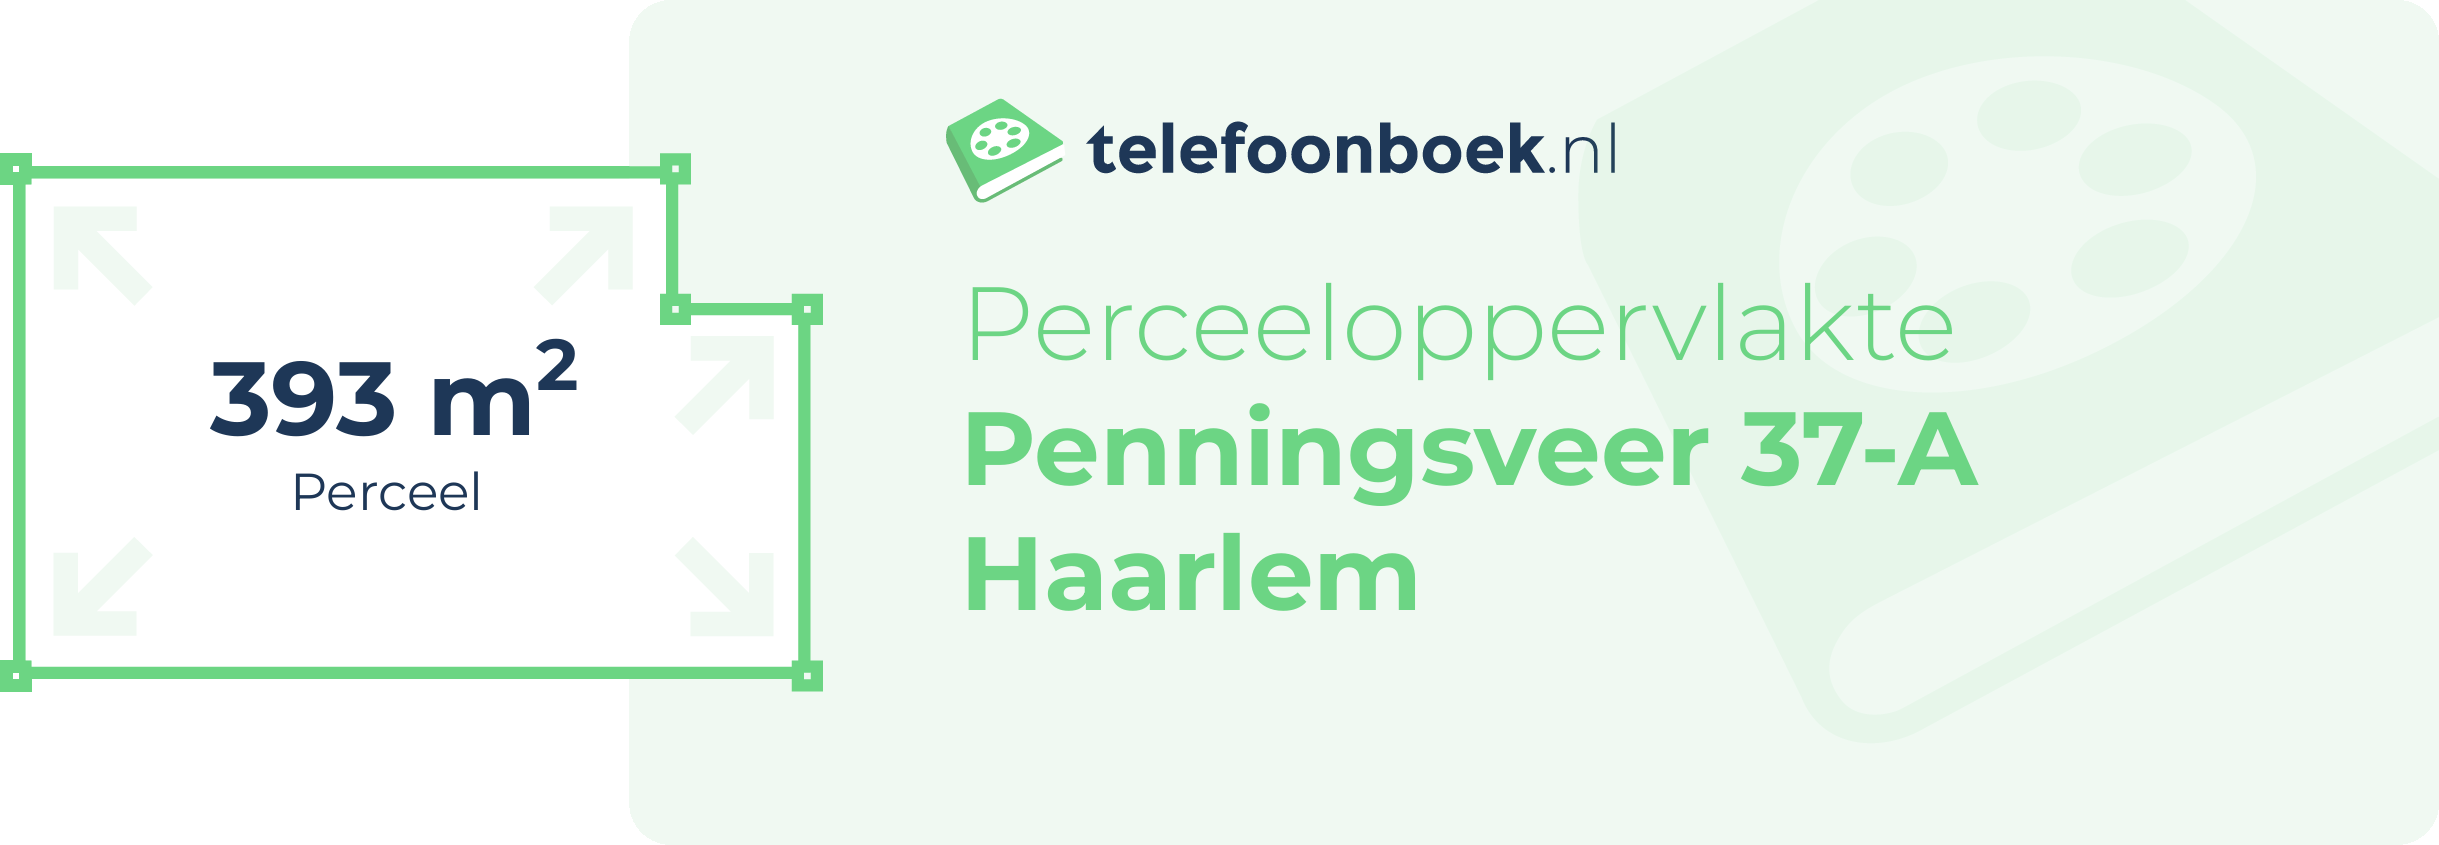 Perceeloppervlakte Penningsveer 37-A Haarlem